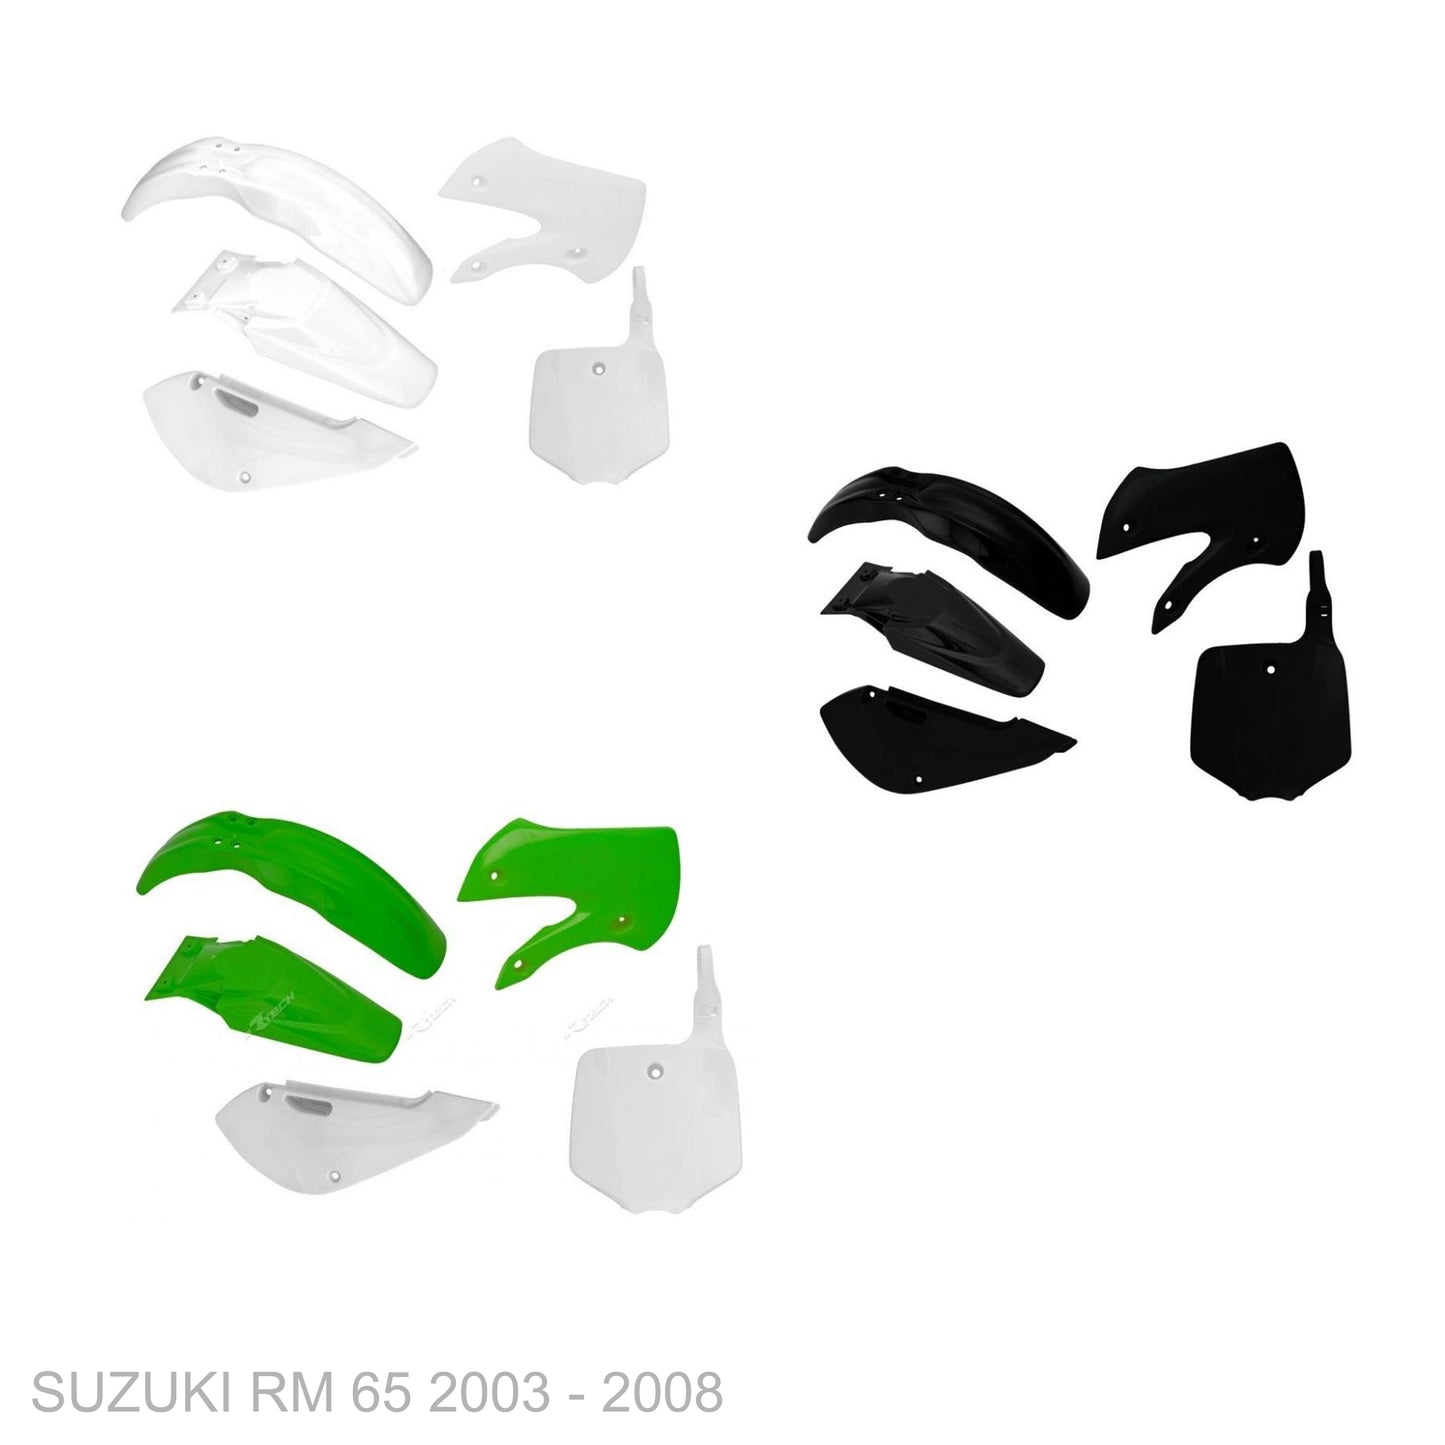 SUZUKI RM 65 2003 - 2008 Start From Scratch Graphics Kits